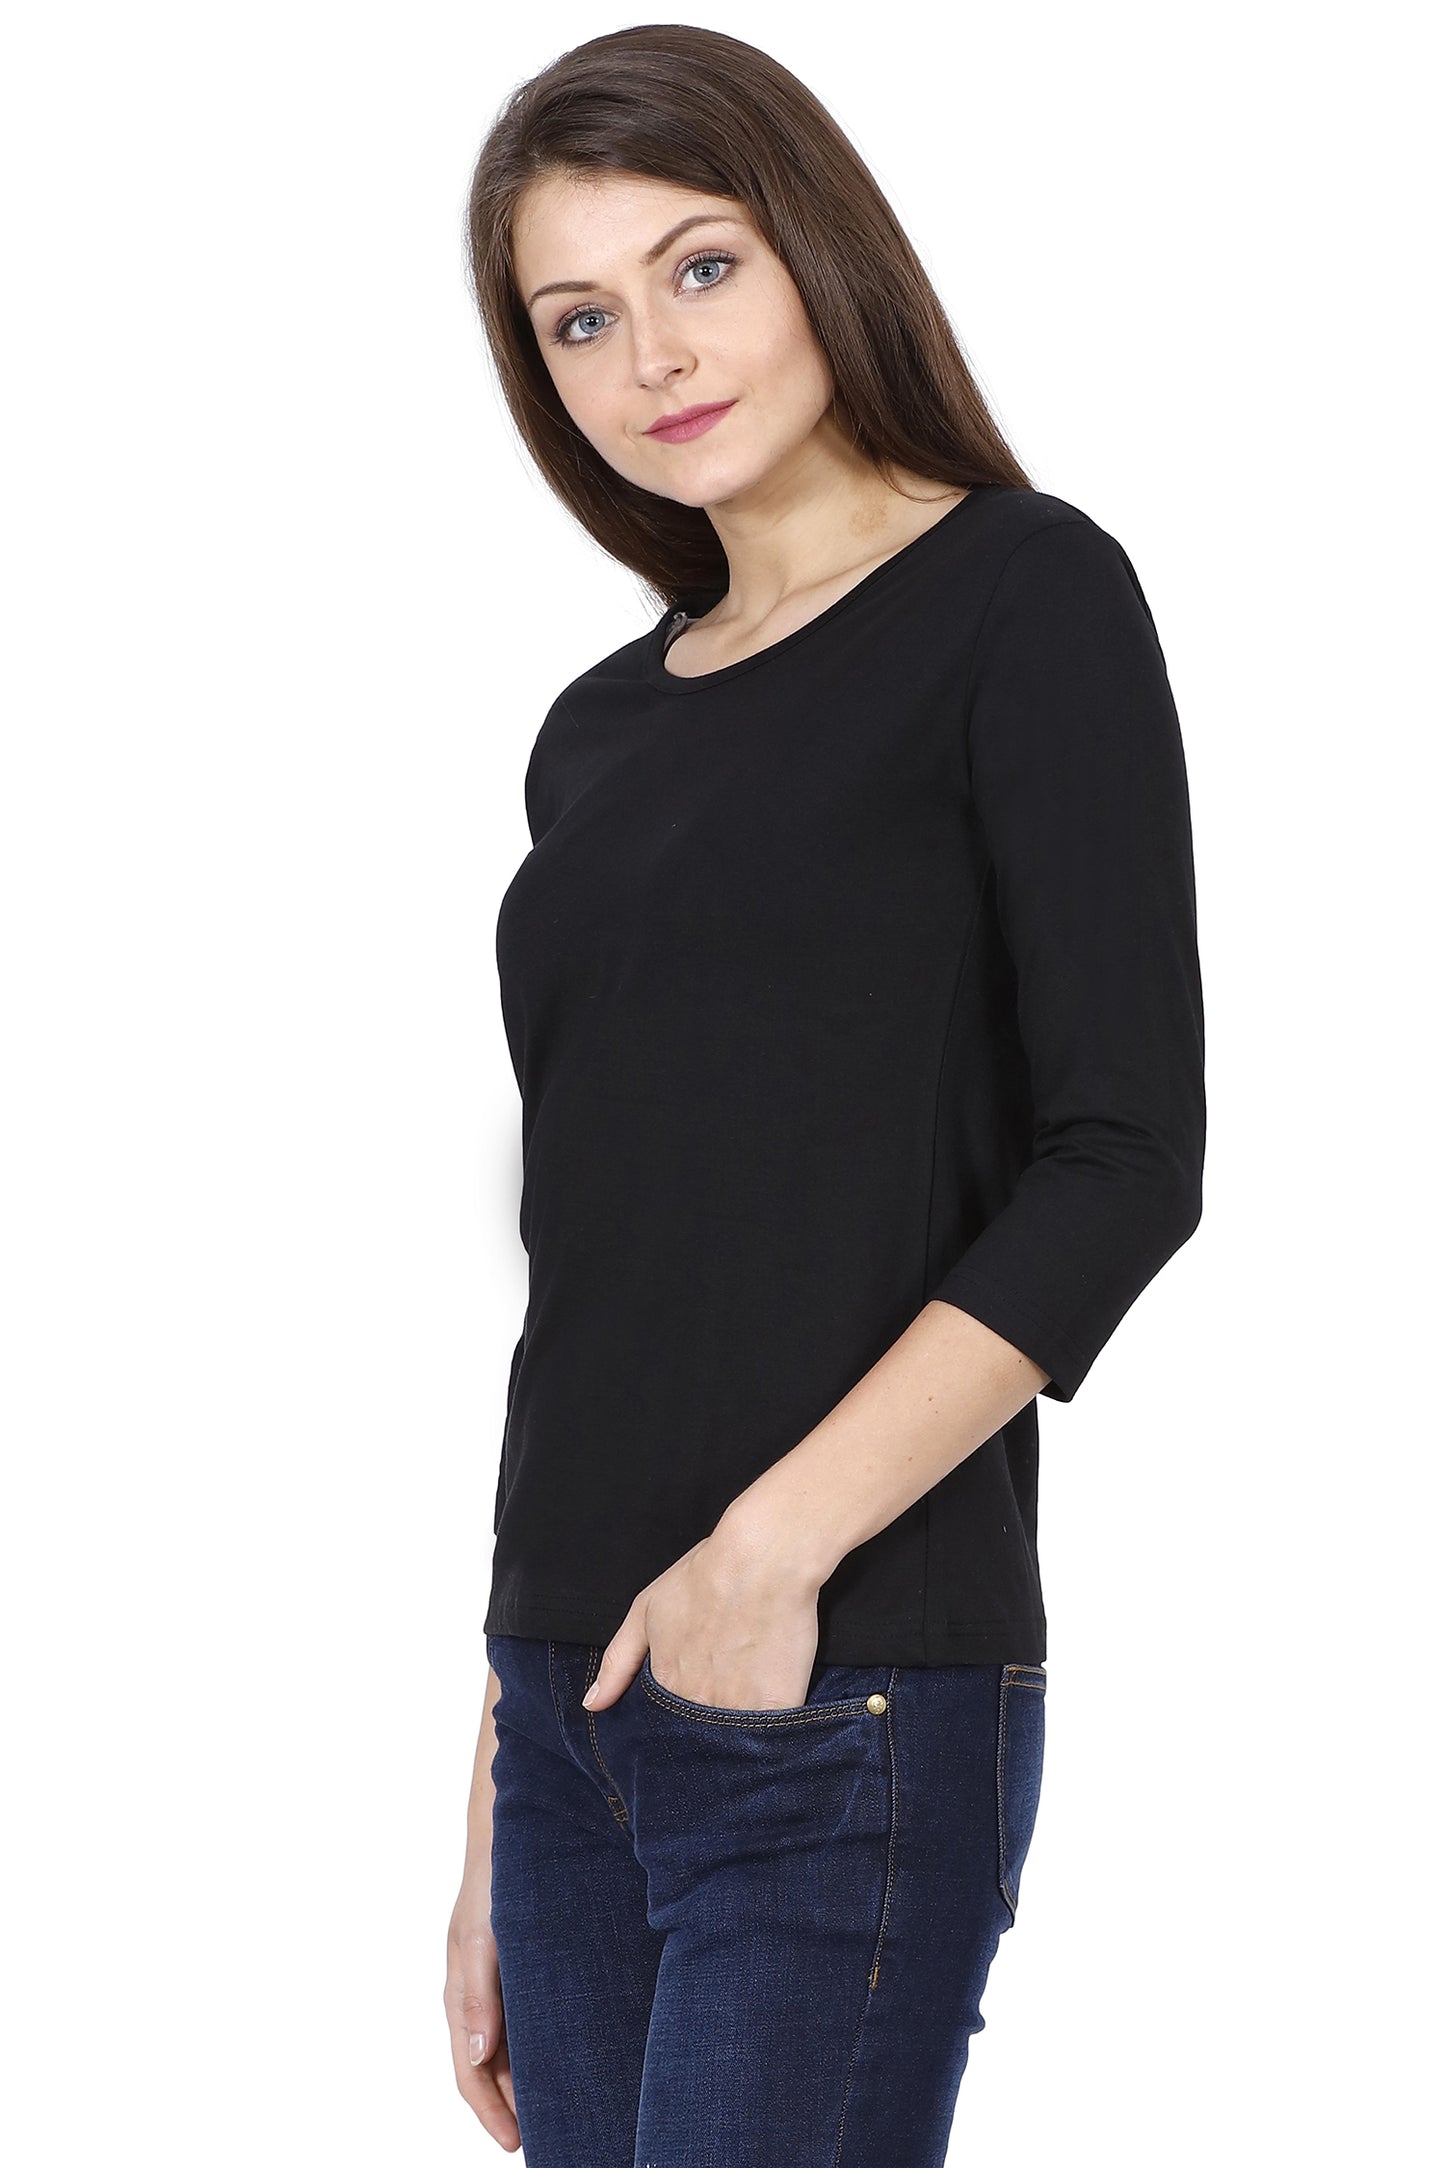 Plain Black | Women 3/4 Sleeve Round Neck T-Shirt